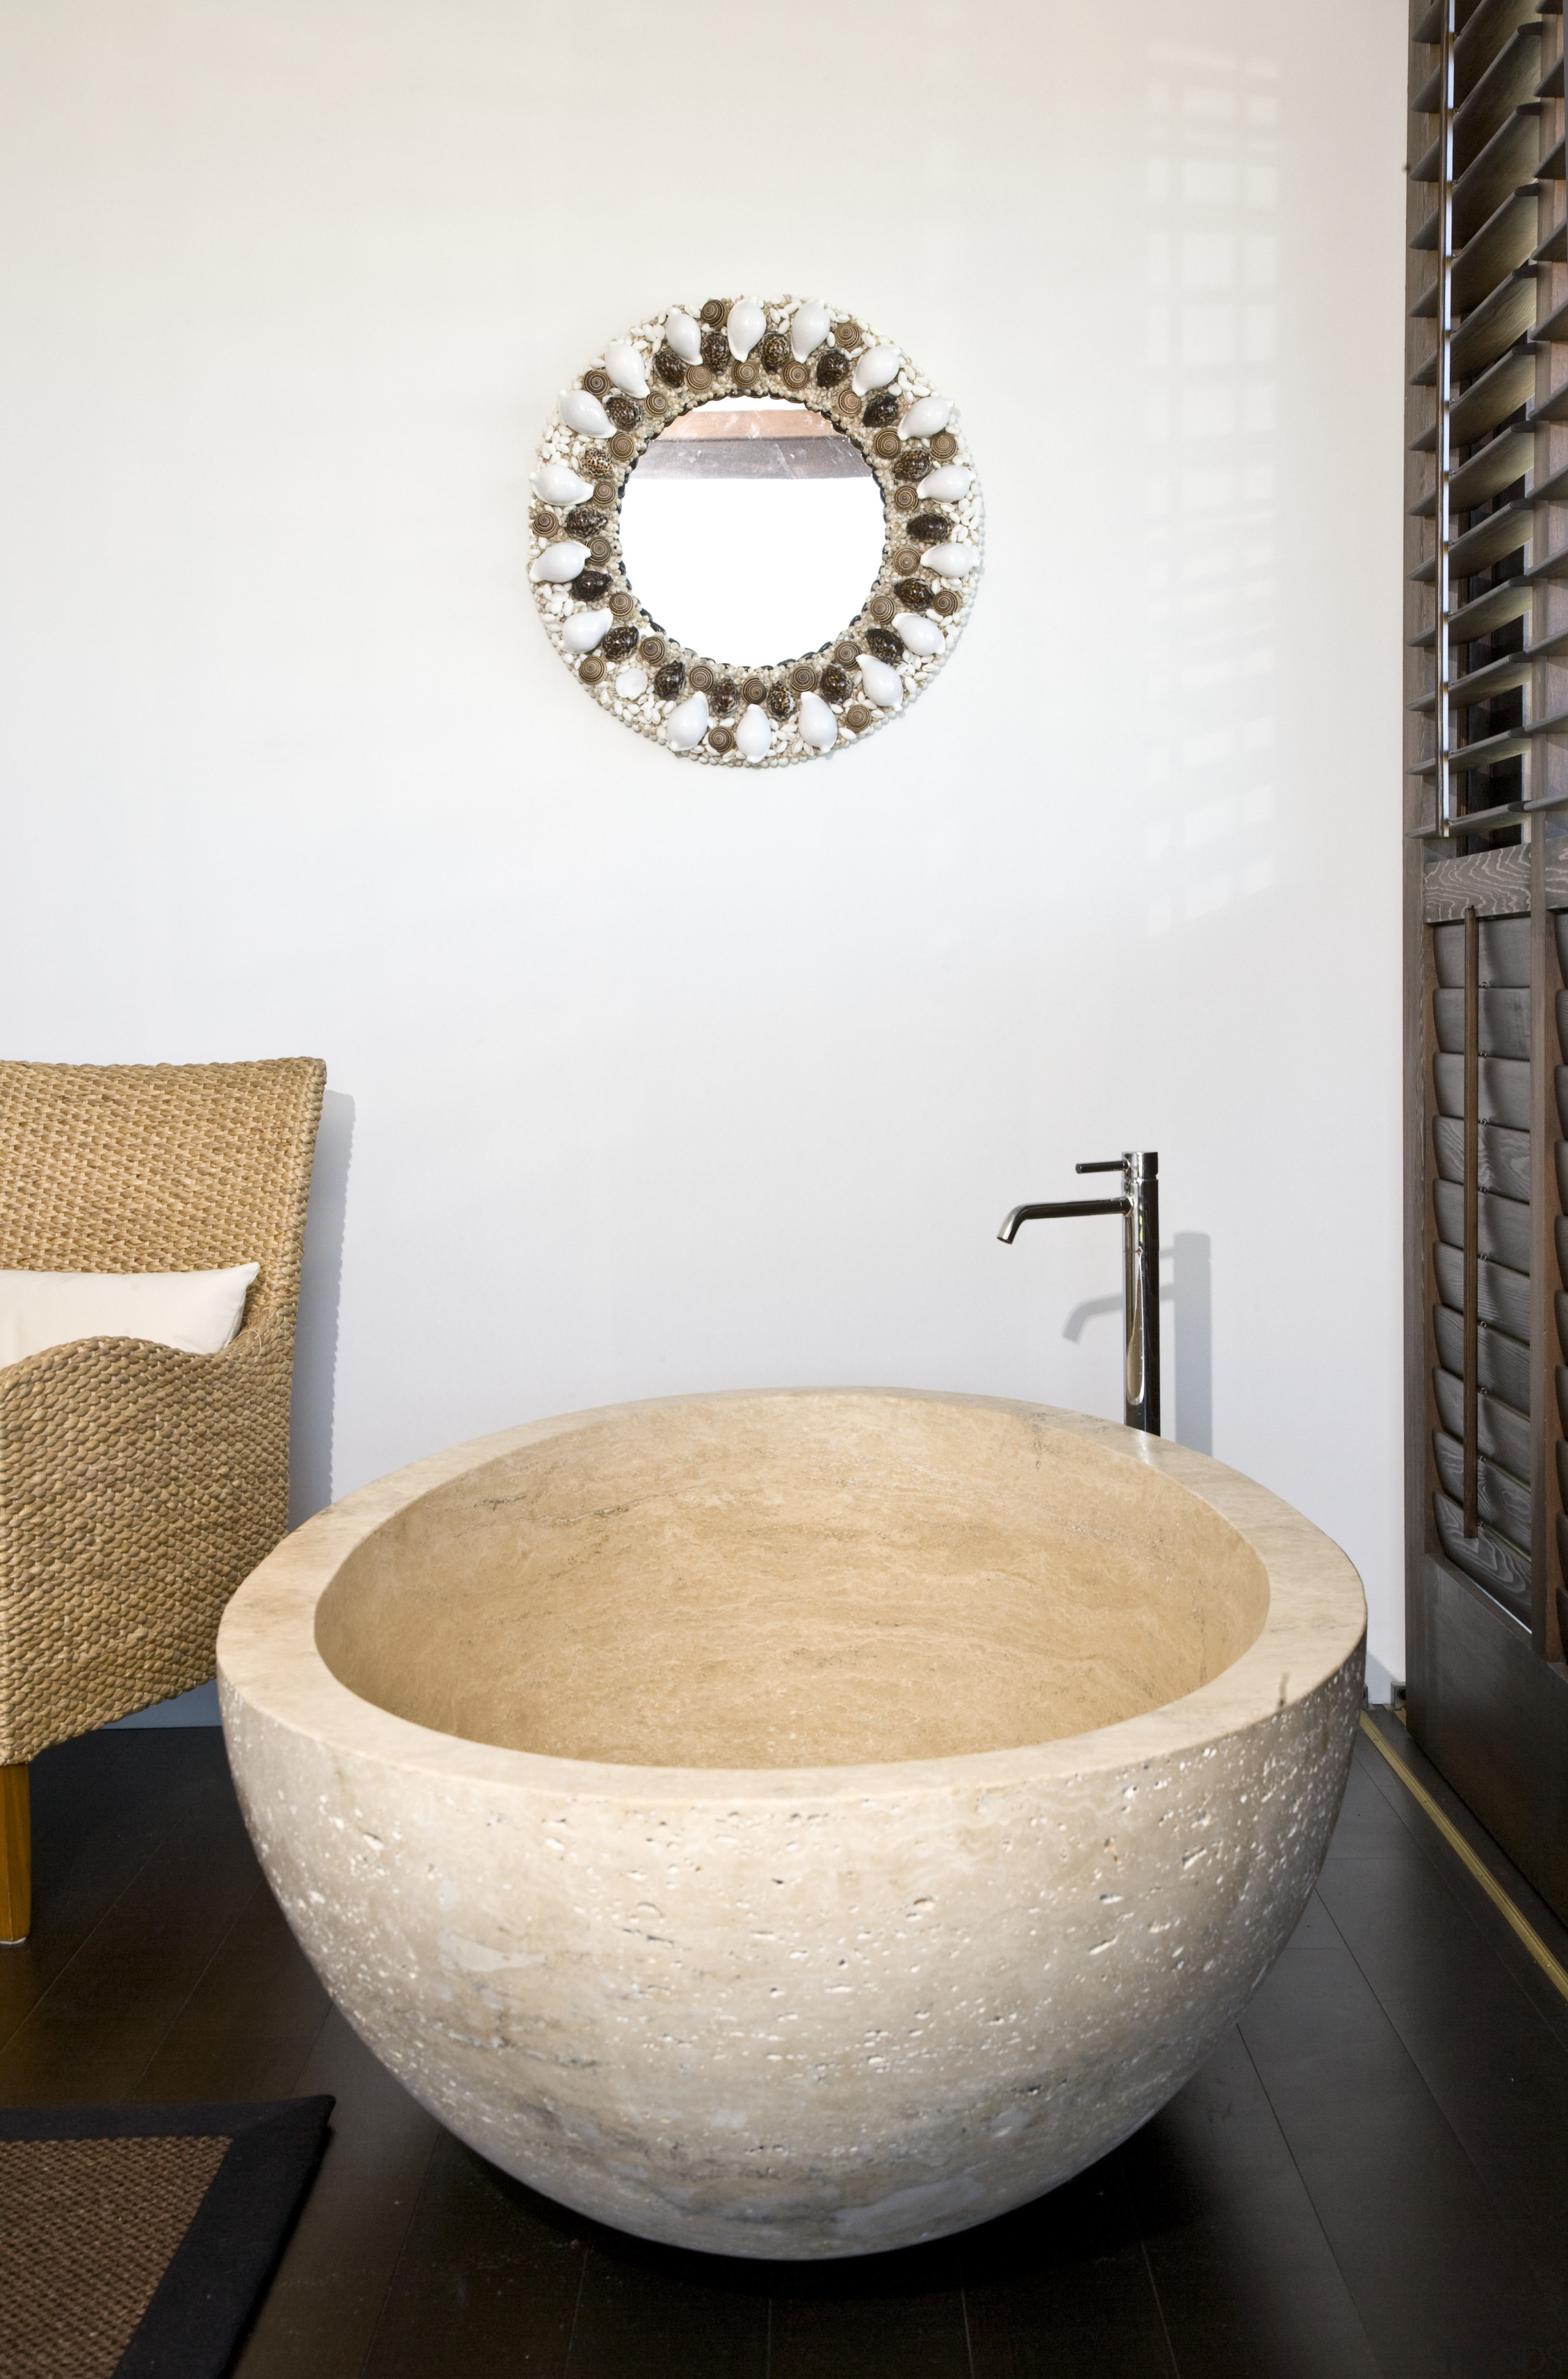 View of stone tub which is in plain bathroom, bathroom sink, ceramic, floor, flooring, interior design, plumbing fixture, product design, sink, tap, toilet seat, white